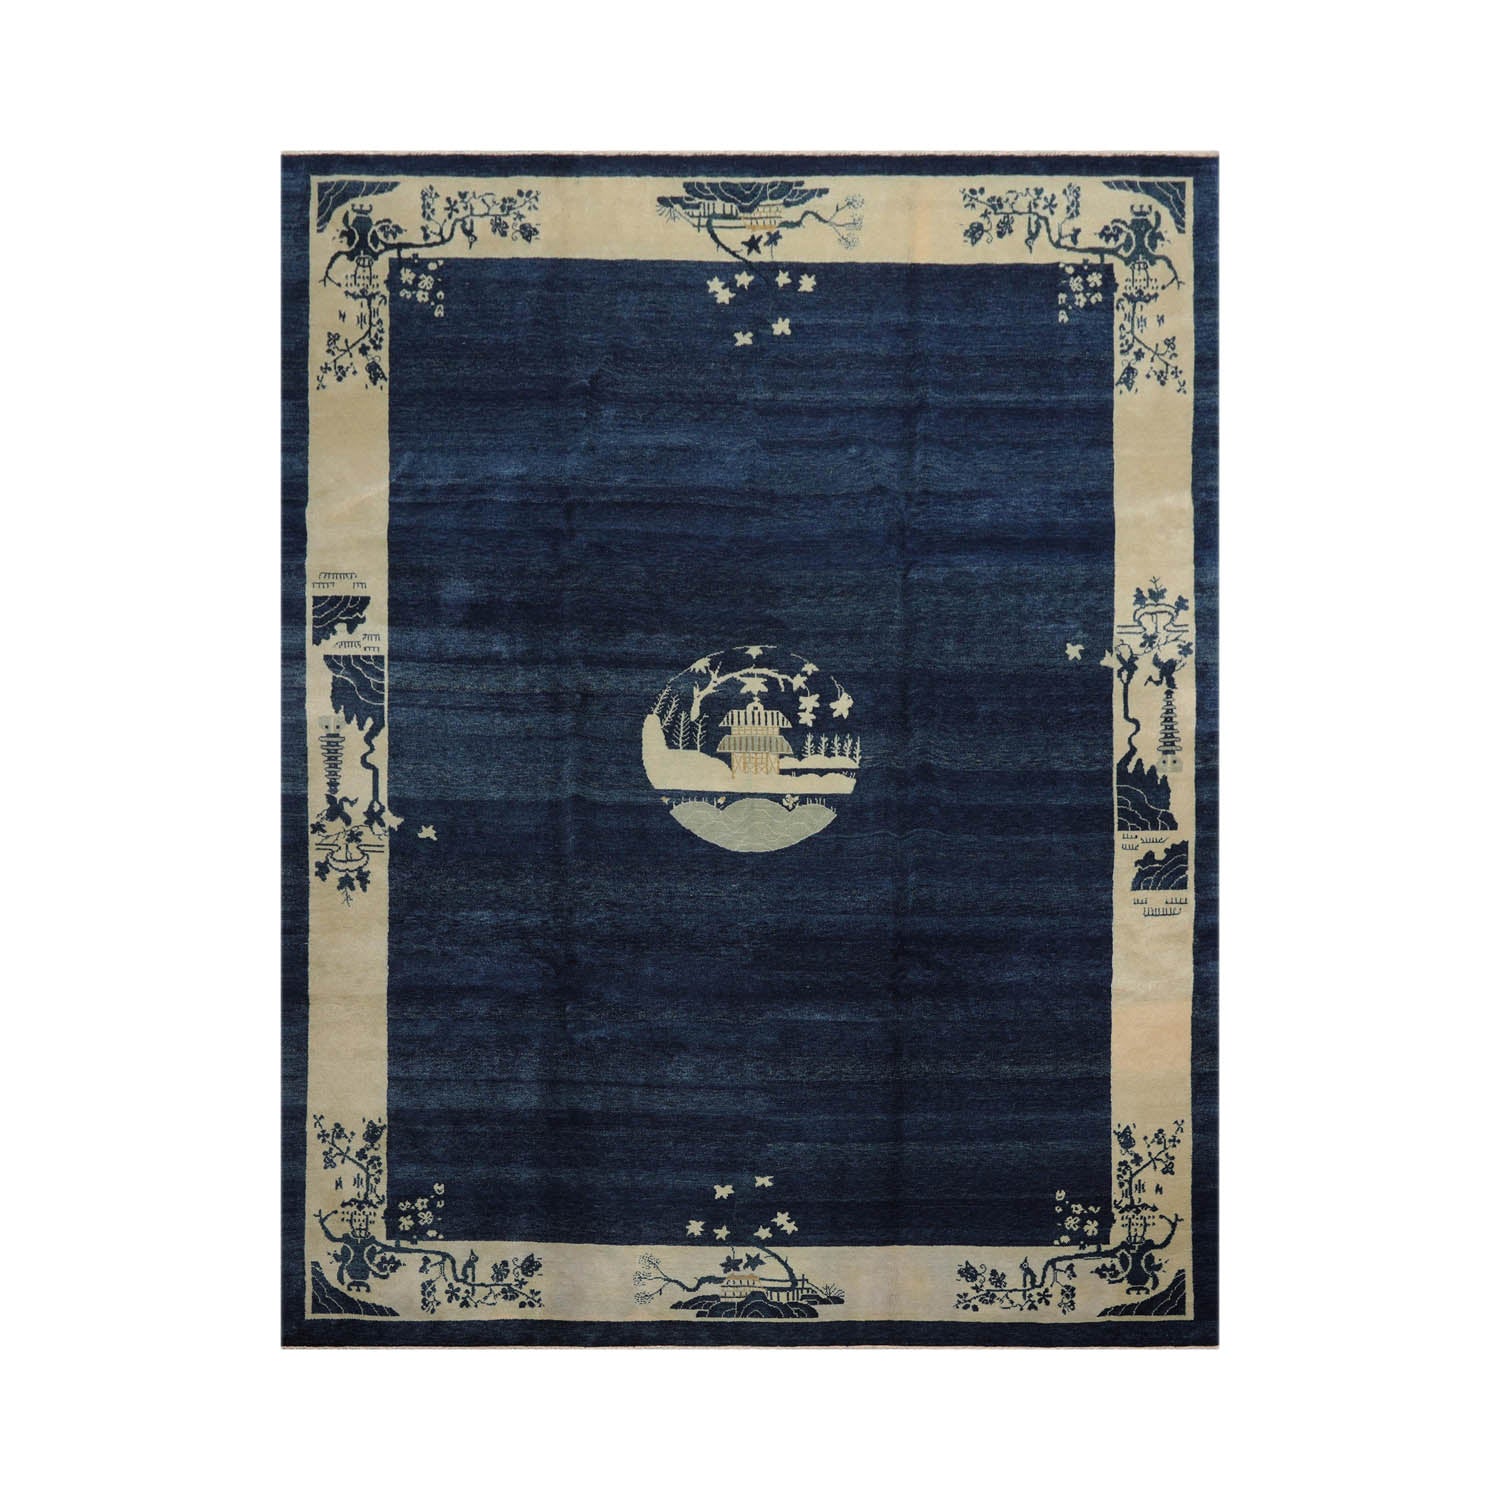 Sharonne 9x12 Hand Knotted Tibetan 100% Wool Michaelian & Kohlberg Chinese Art Deco Oriental Area Rug Navy Blue, Ivory Color